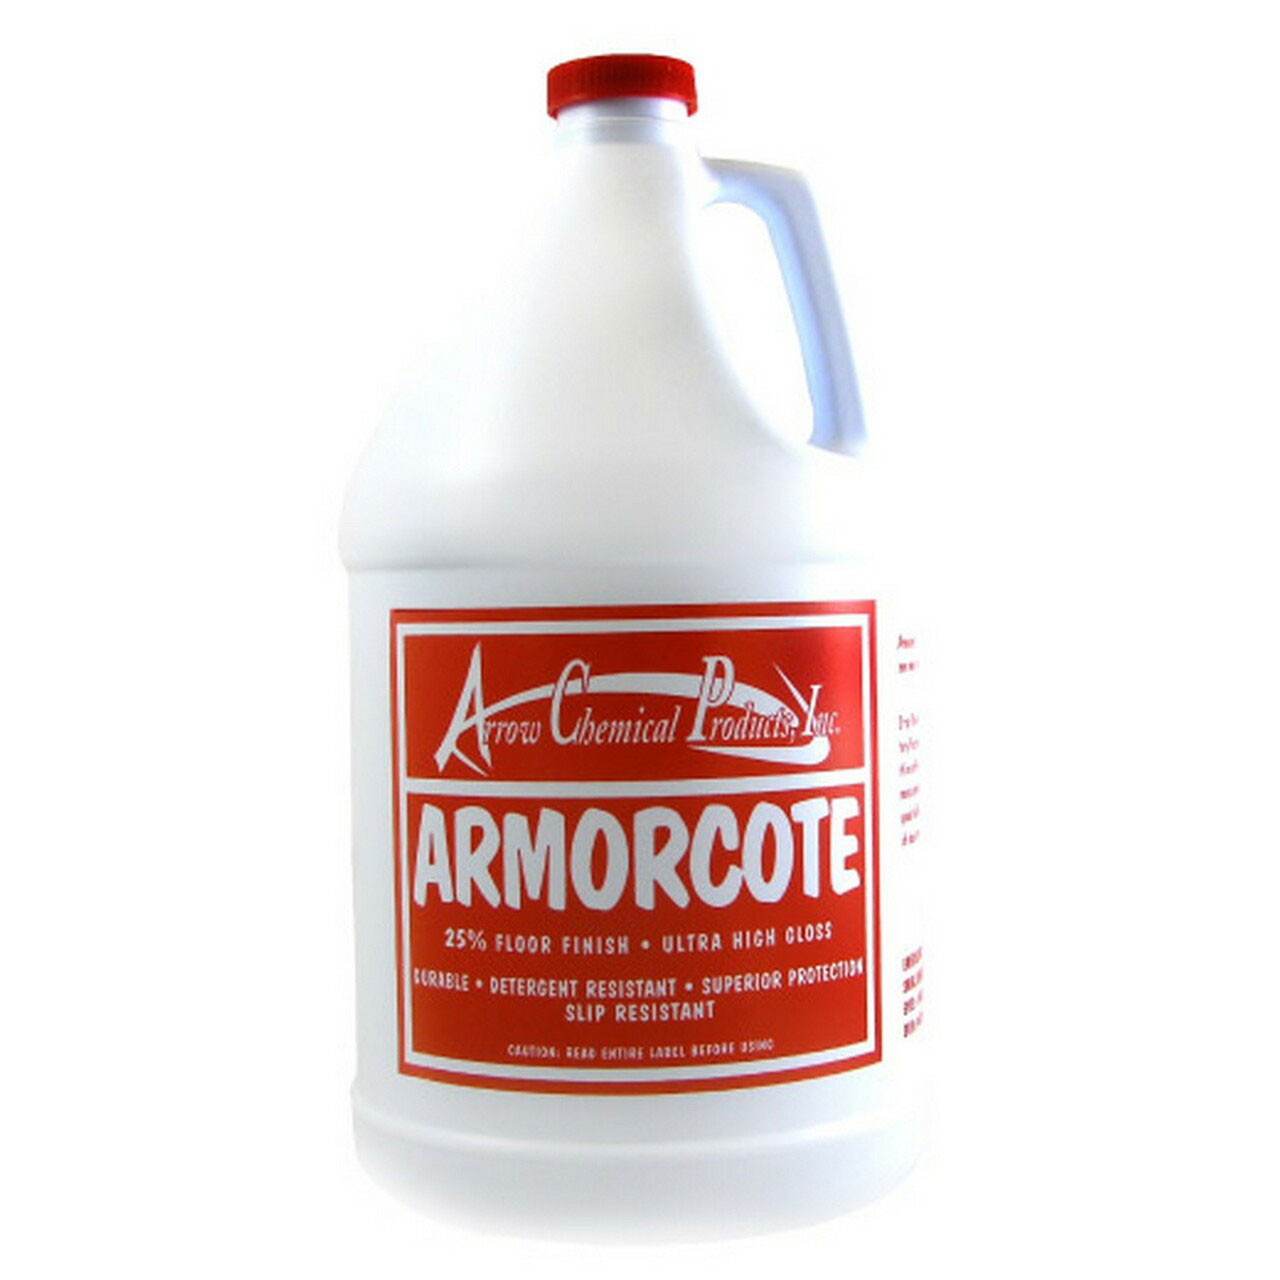 Armorcote 309 Floorshine Polymer Floor Finish - Coating - High Gloss - 1 Gallon